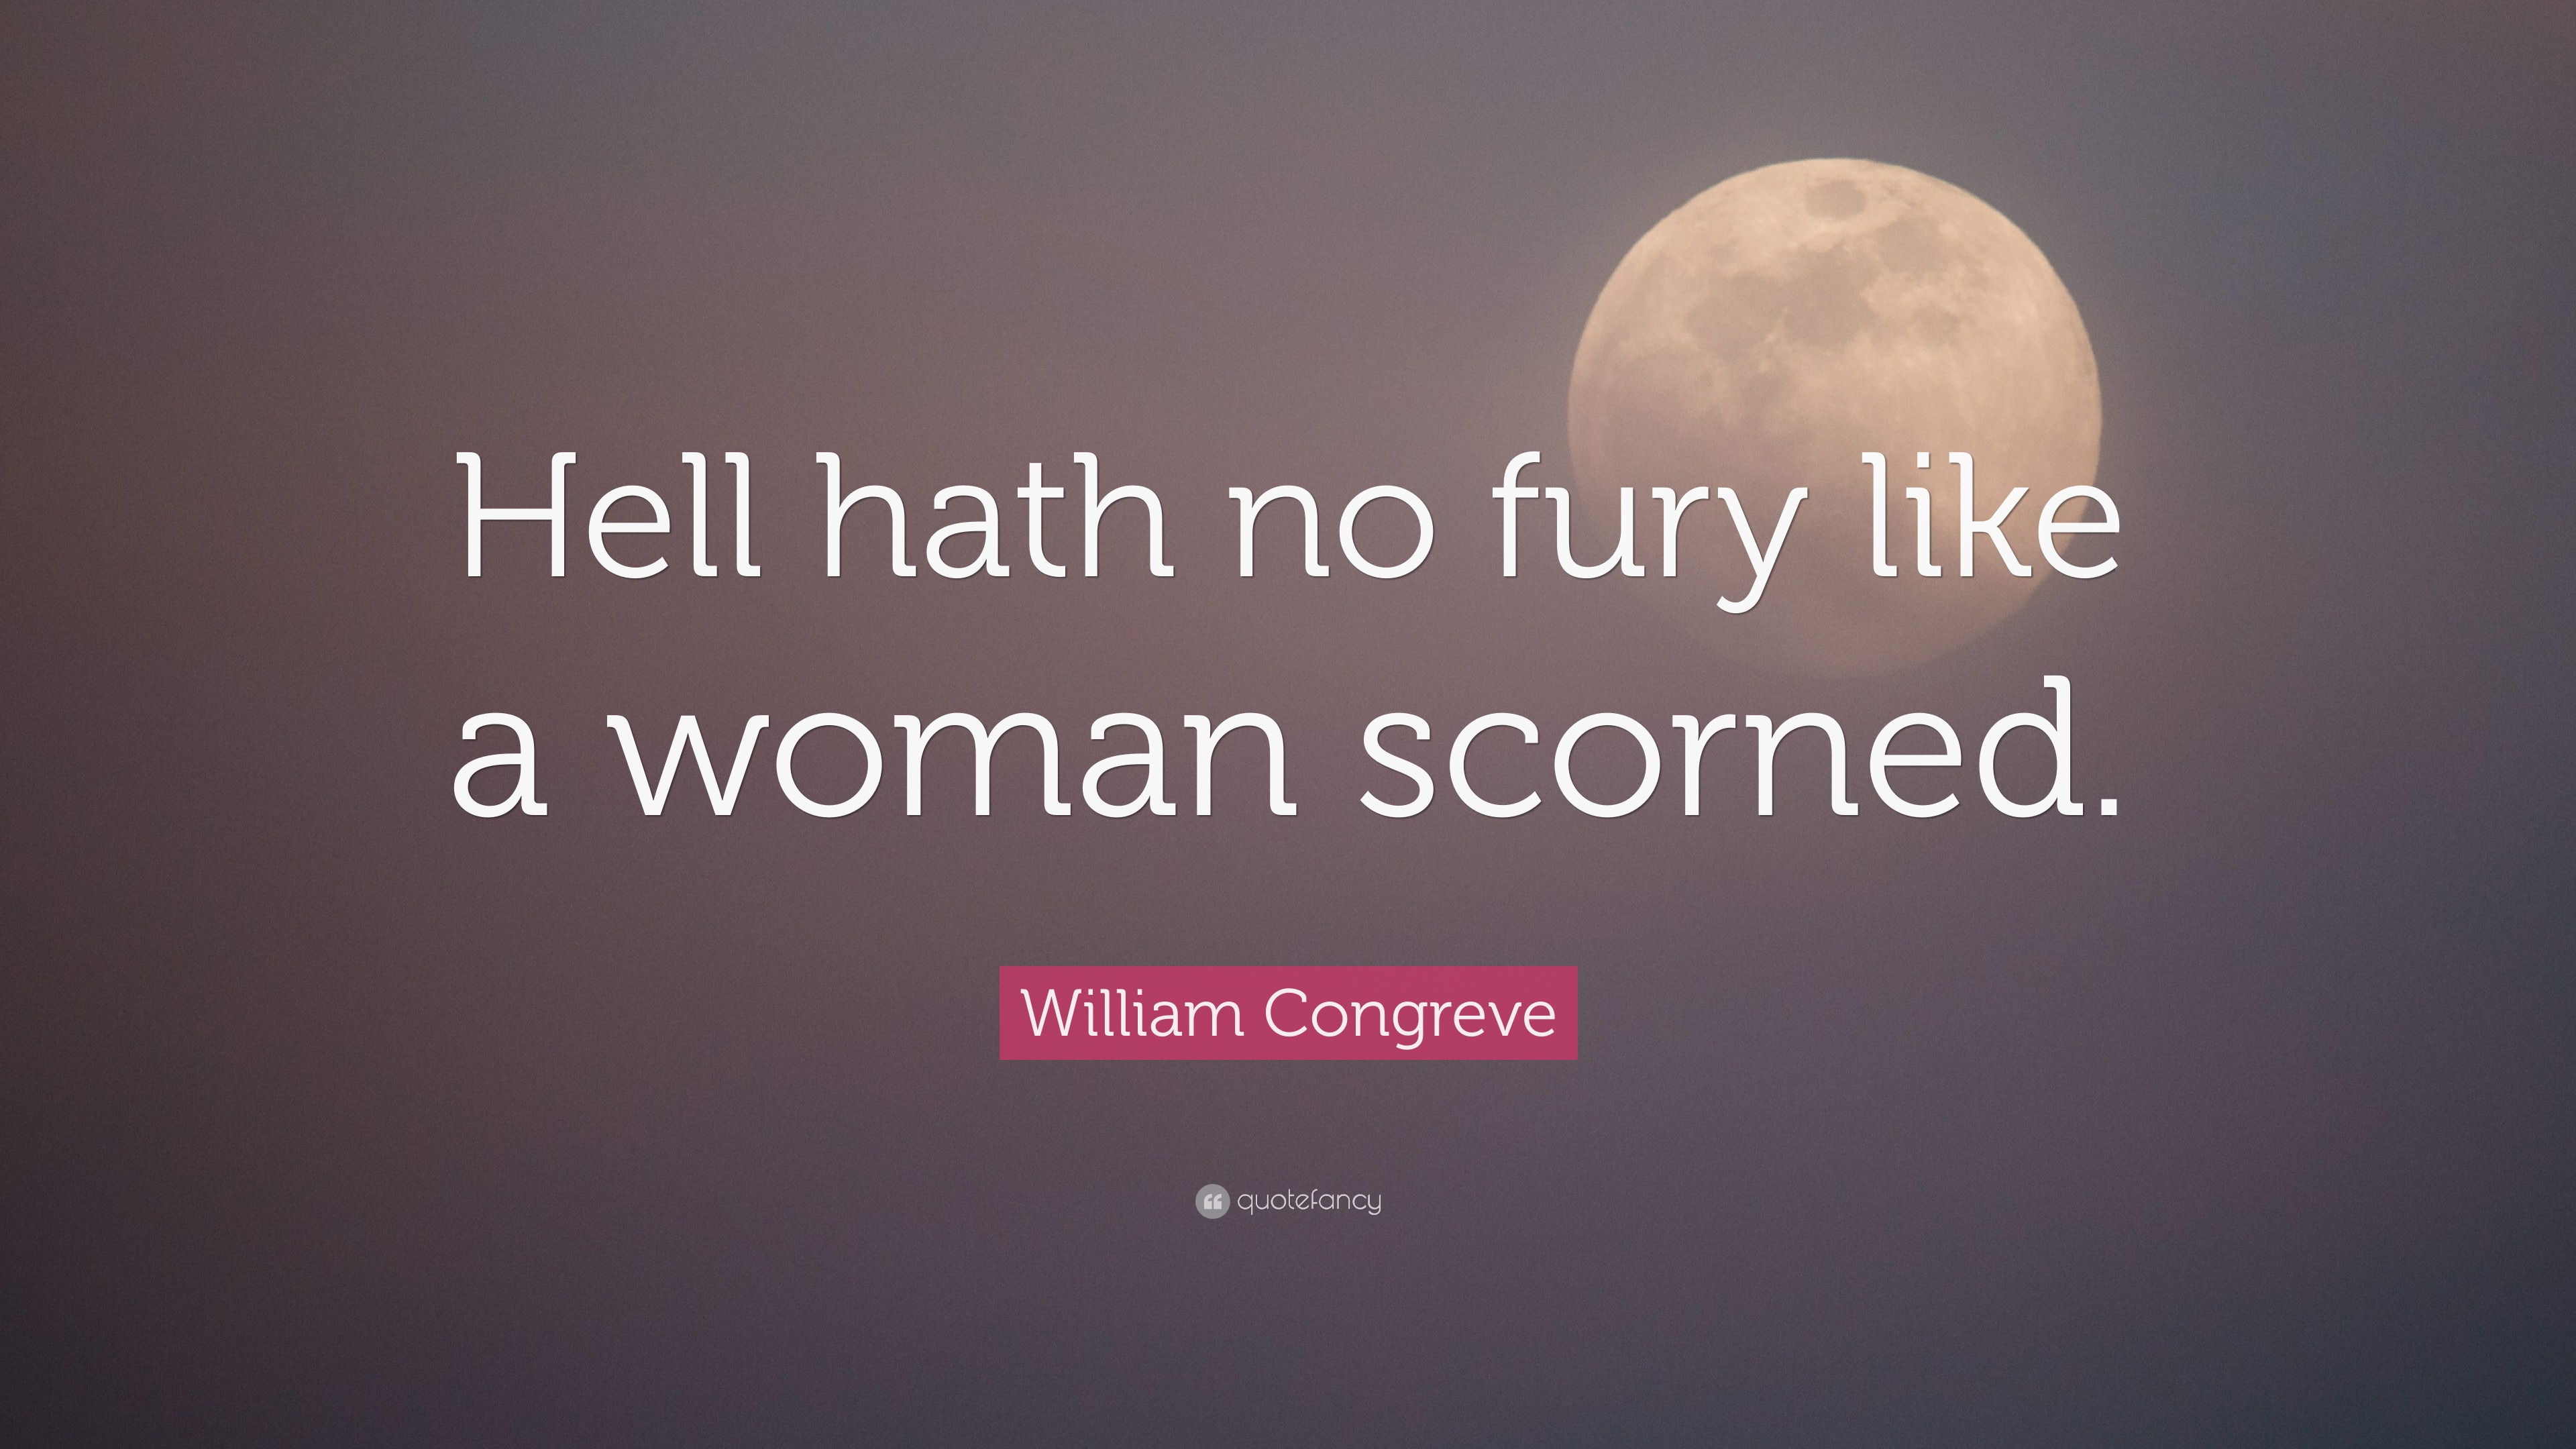 hell hath no fury like a woman scorn